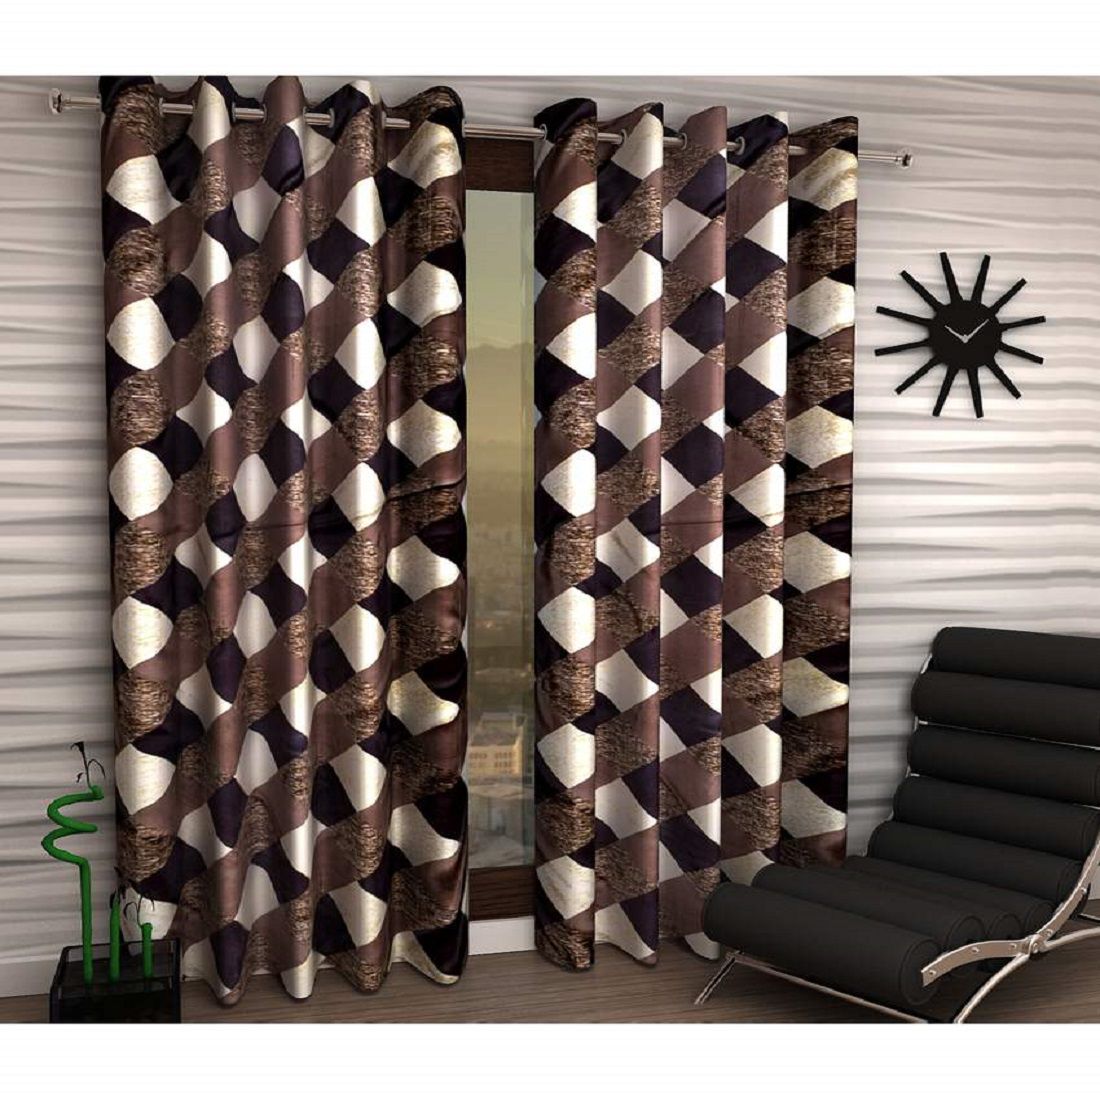     			Tanishka Fabs Semi-Transparent Curtain 7 ft ( Pack of 2 ) - Brown